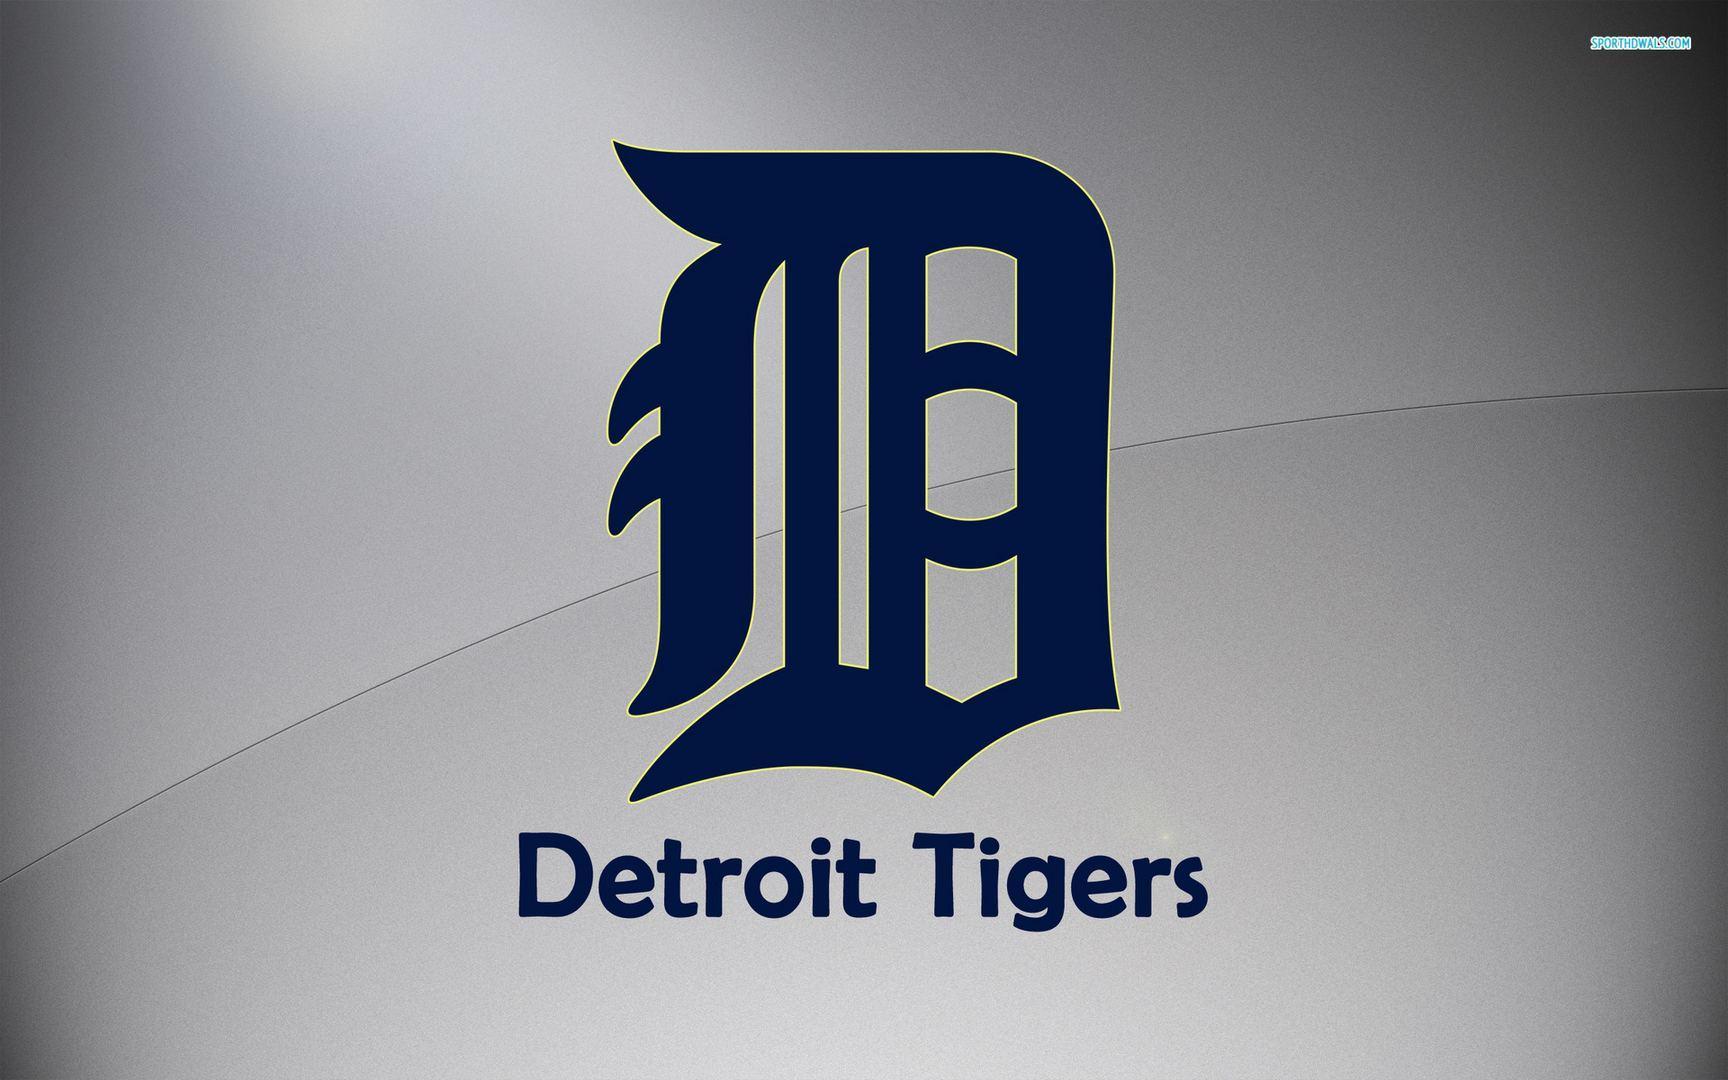 Detroit Tigers Wallpapers 2016 Schedule - Wallpaper Cave